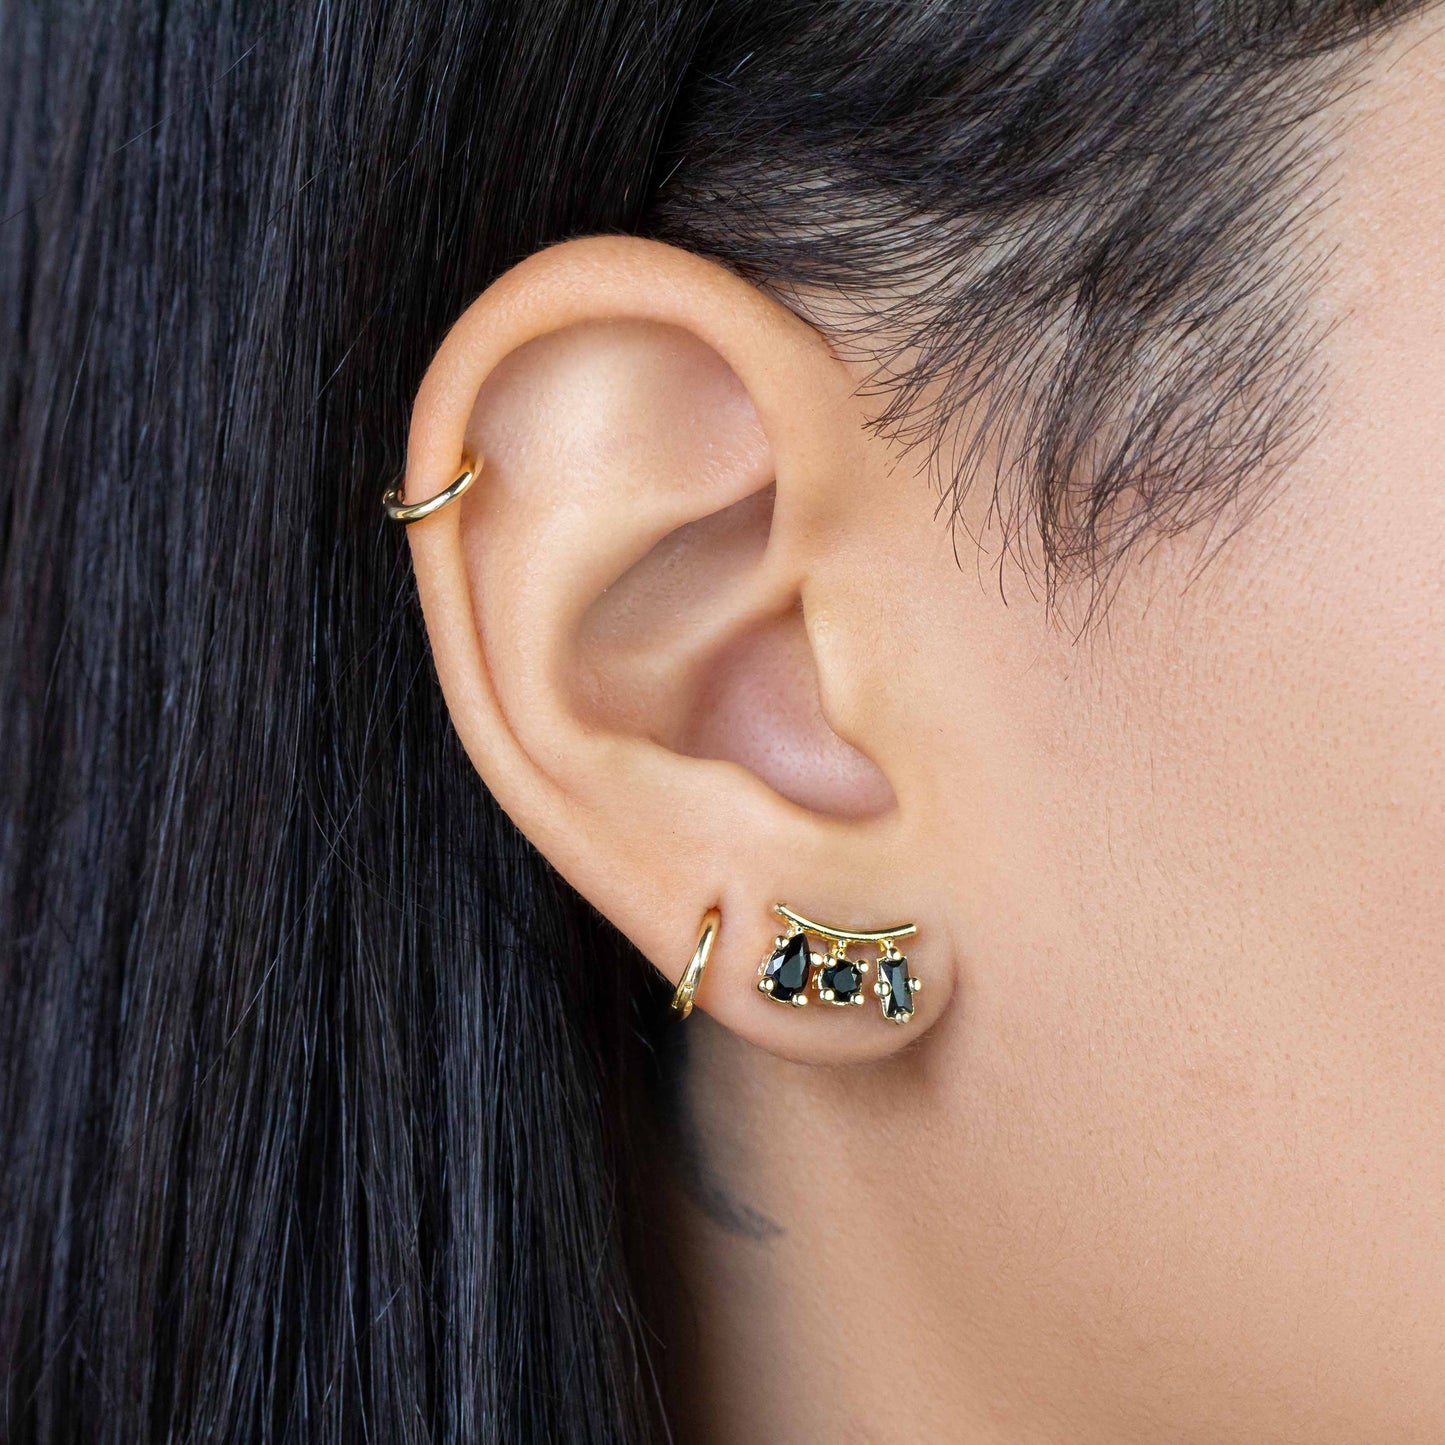 18k Gold Filled Black Cubic Zirconia 3-Shapes Stud Earrings